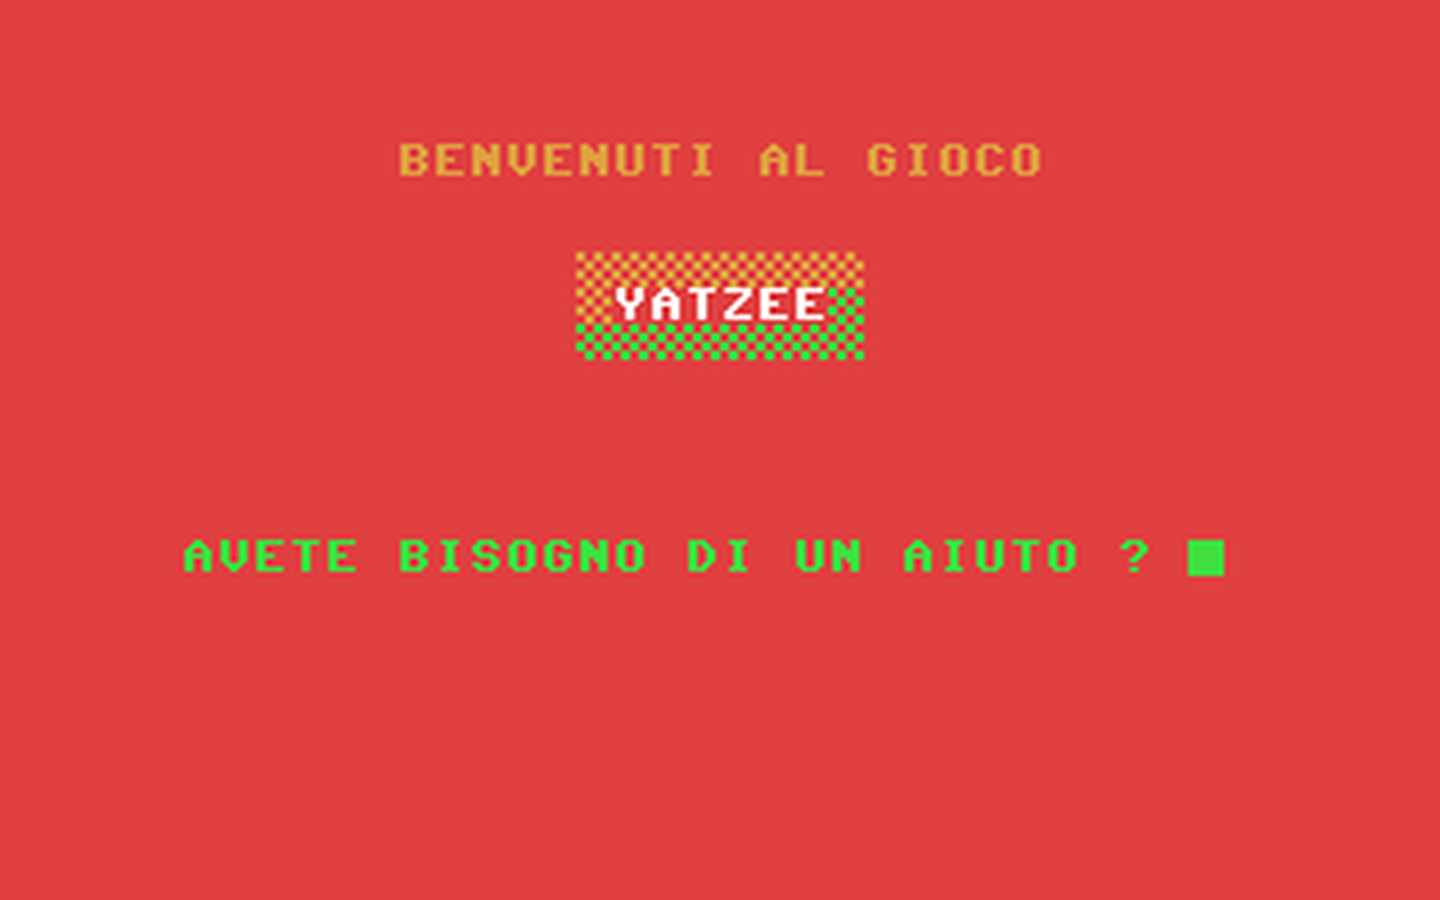 C64 GameBase Yatzee Techniche_Nuove/SOFT 1984